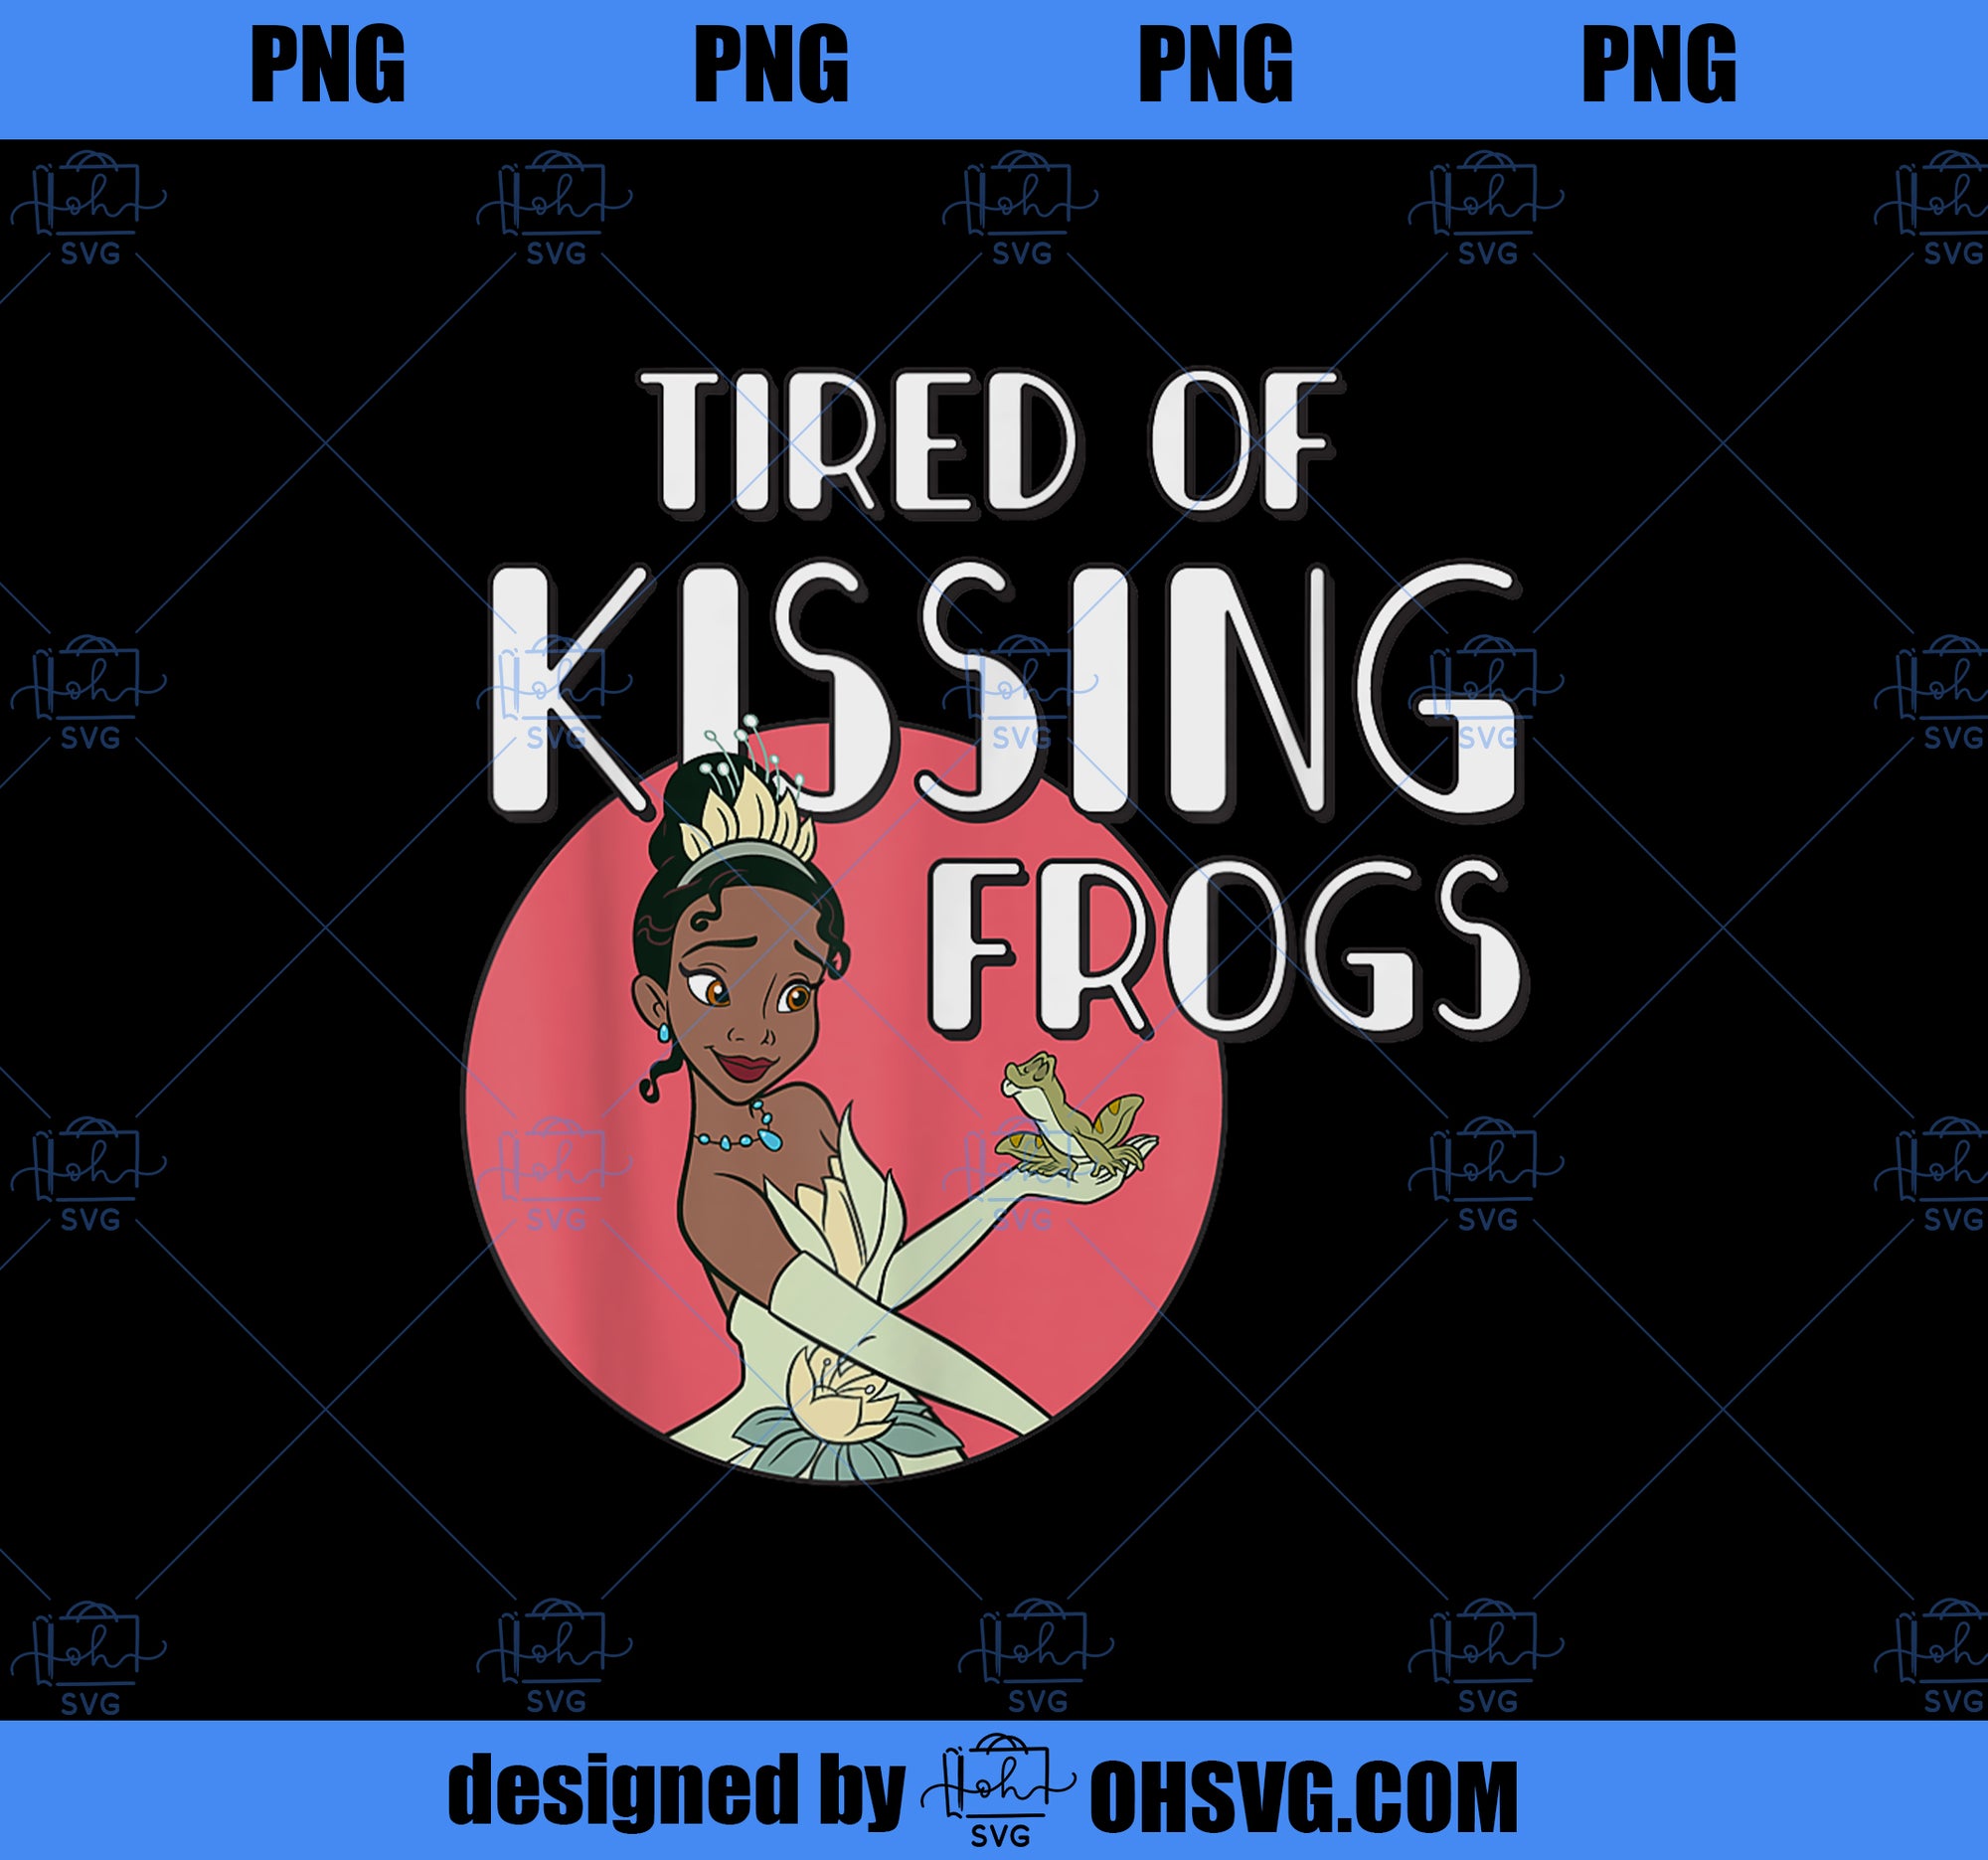 Disney Princess Tiana Tired of Kissing Frogs PNG, Disney PNG, Princess PNG